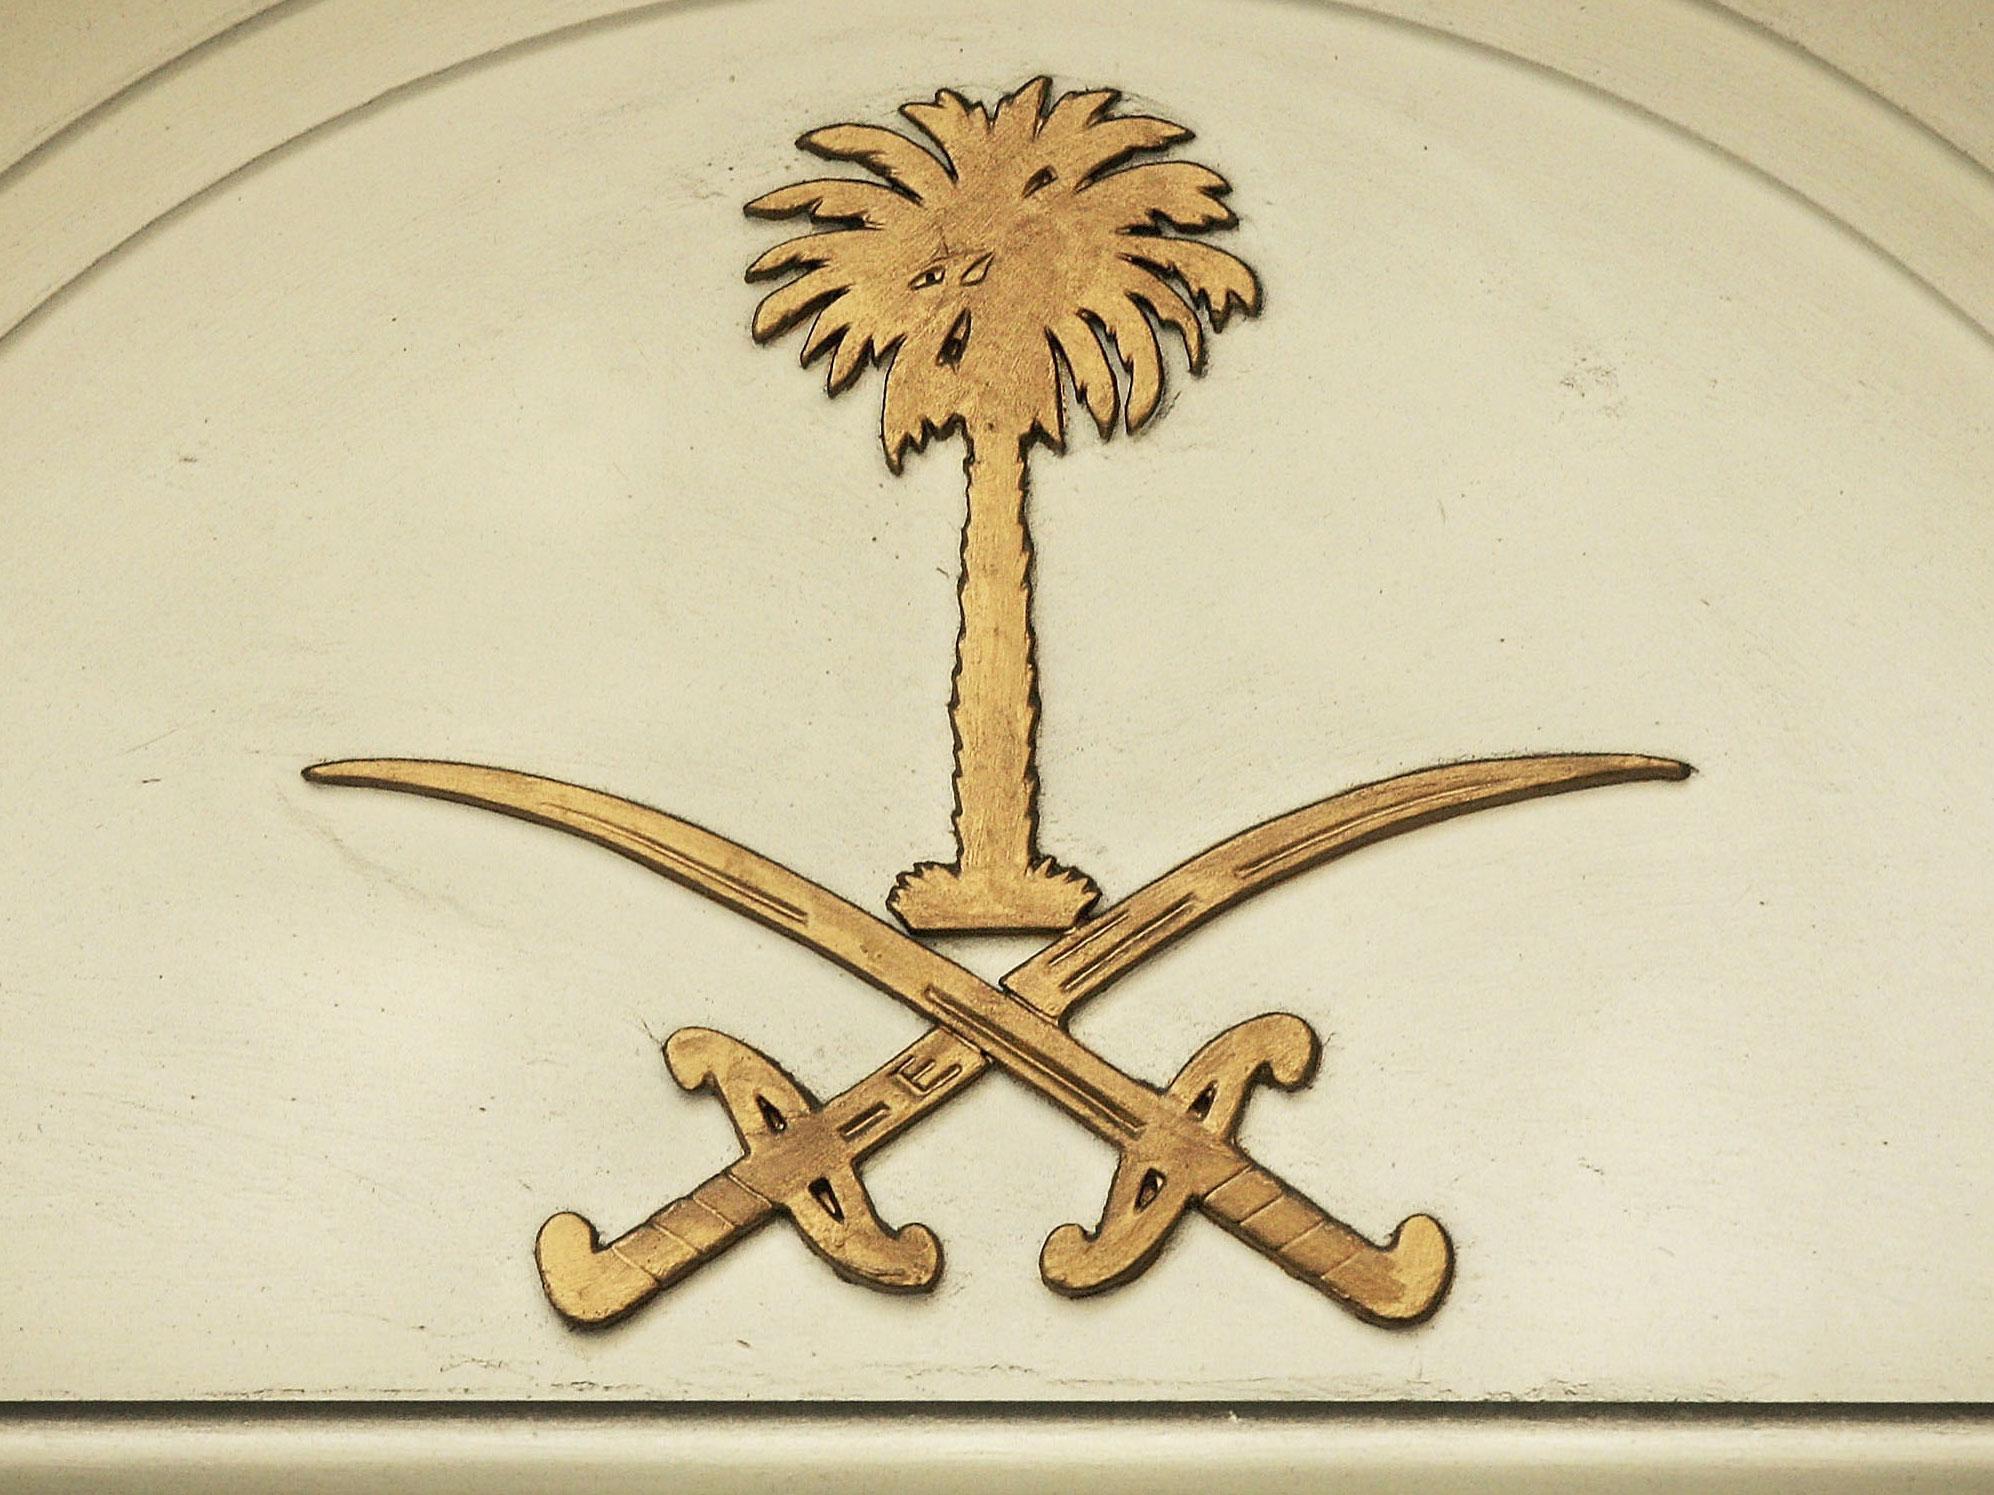 The emblem of Saudi Arabia above the embassy in London